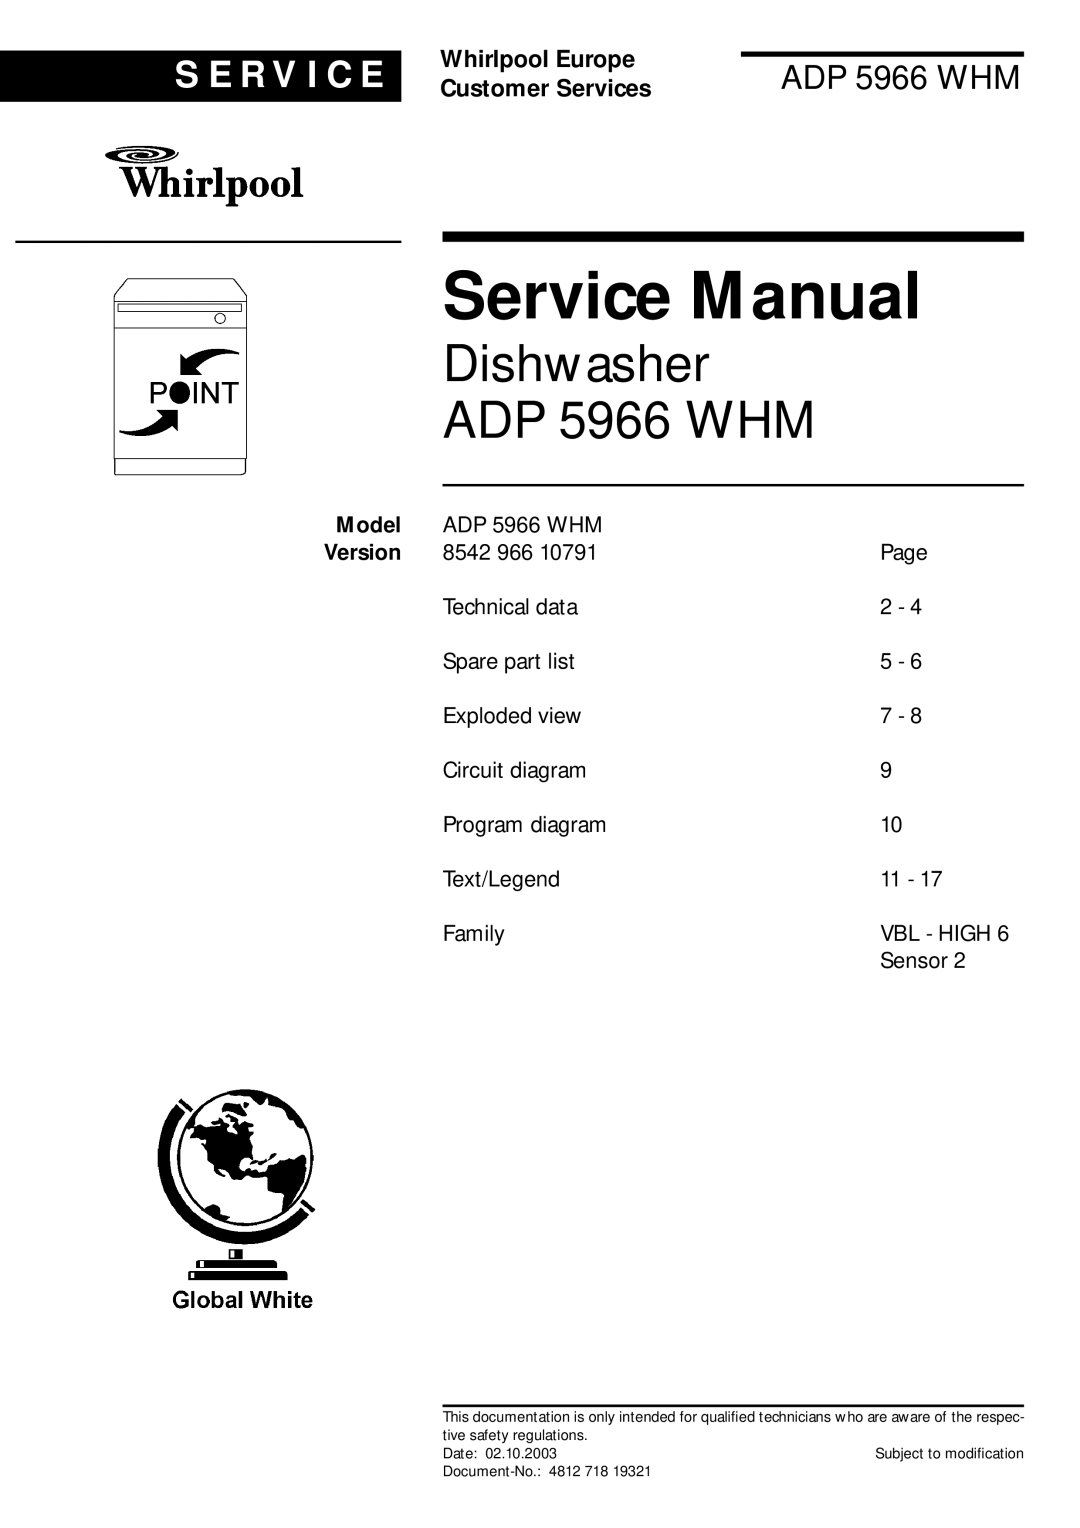 Whirlpool service manual Model, Dishwasher ADP 5966 WHM, S E R V I C E, Whirlpool Europe, Customer Services 